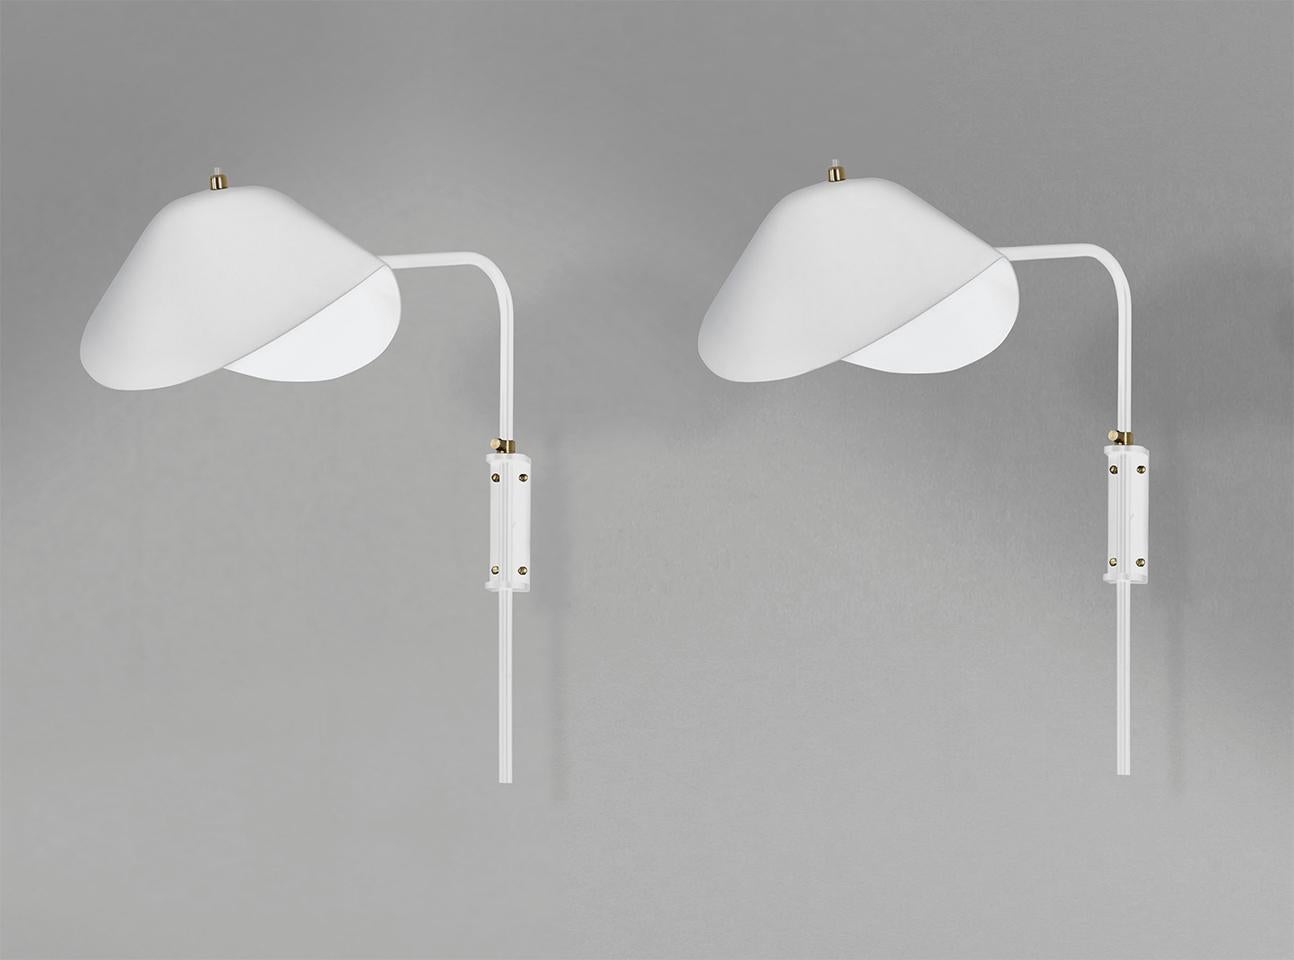 French Serge Mouille Mid-Century Modern White Anthony Wall Lamp Whit Fixing Bracket Set